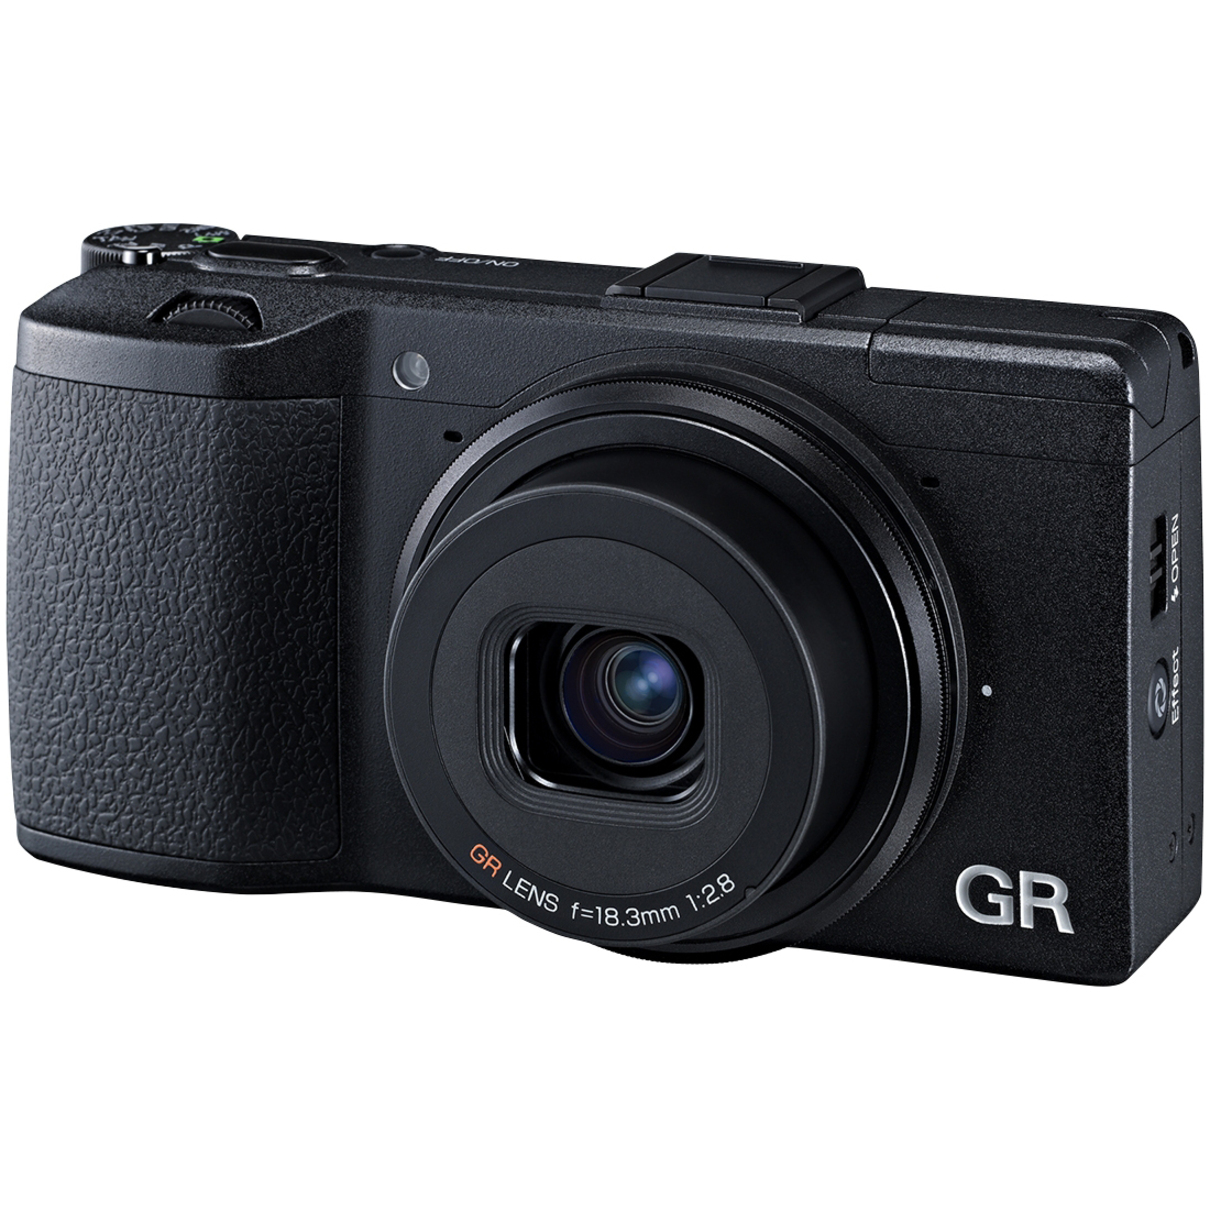 Ricoh GR 16.2 Megapixel Compact Camera, Black - image 6 of 6